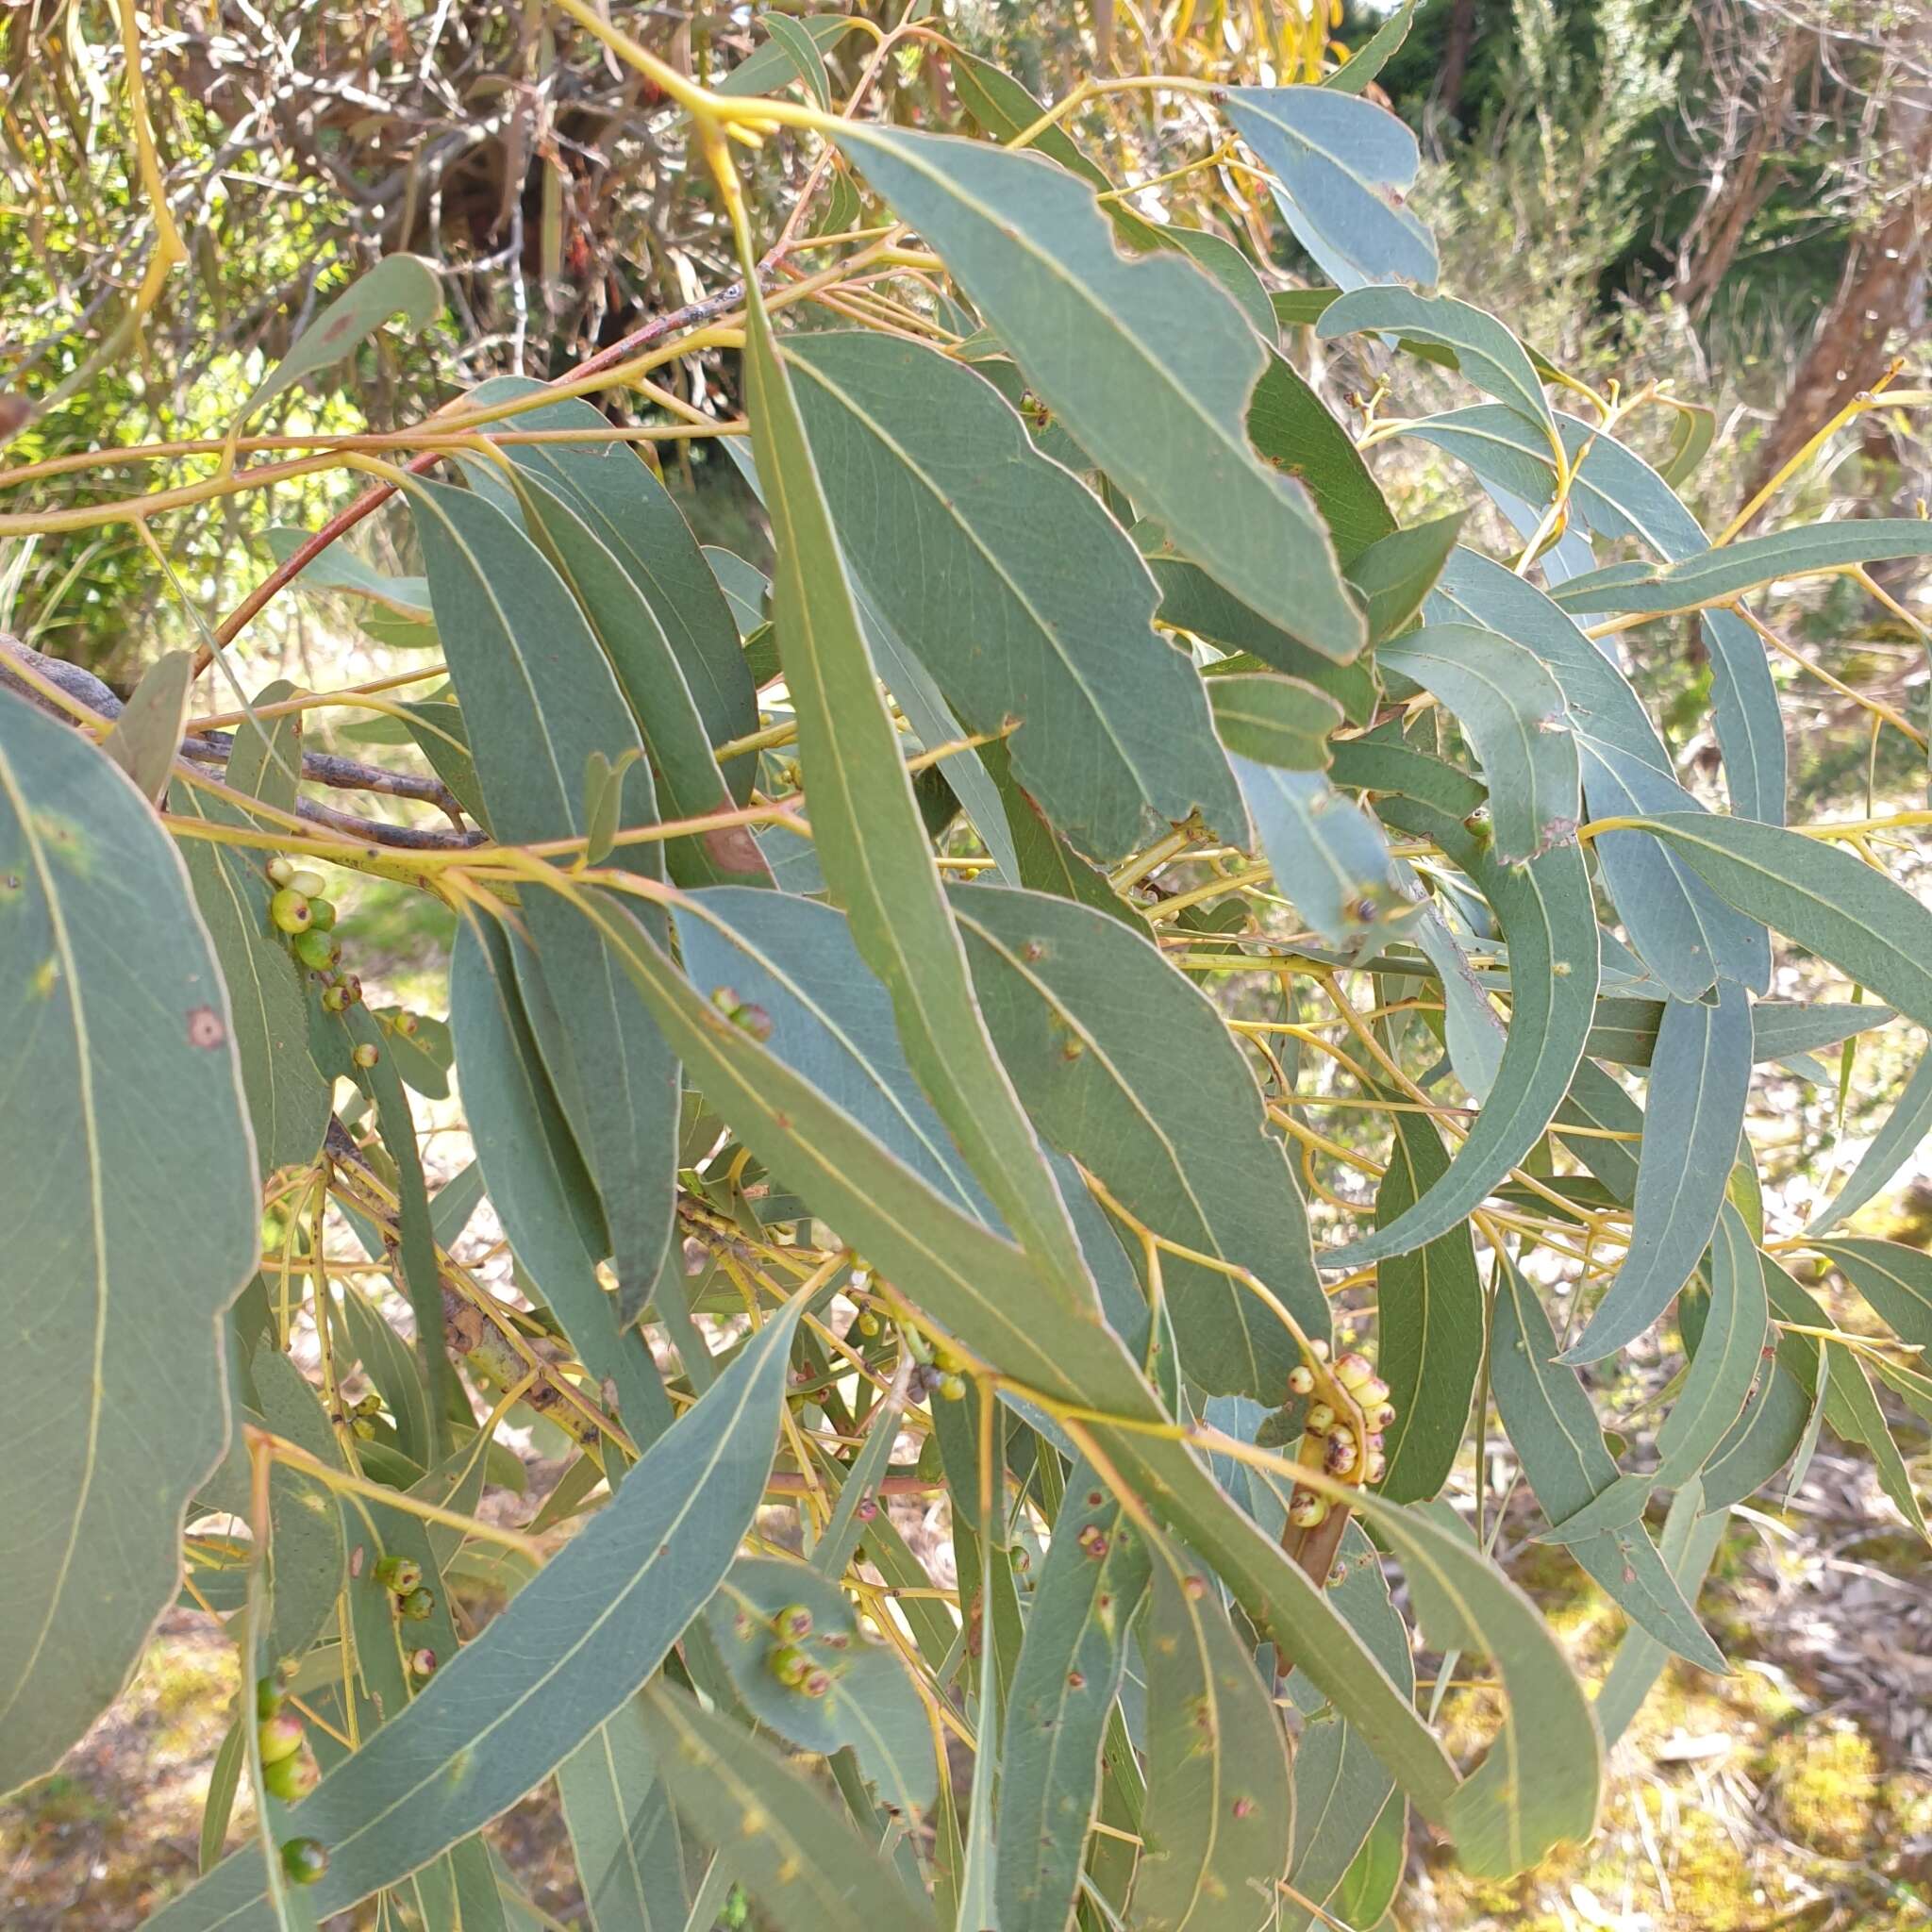 Image of Eucalyptus cephalocarpa Blakely